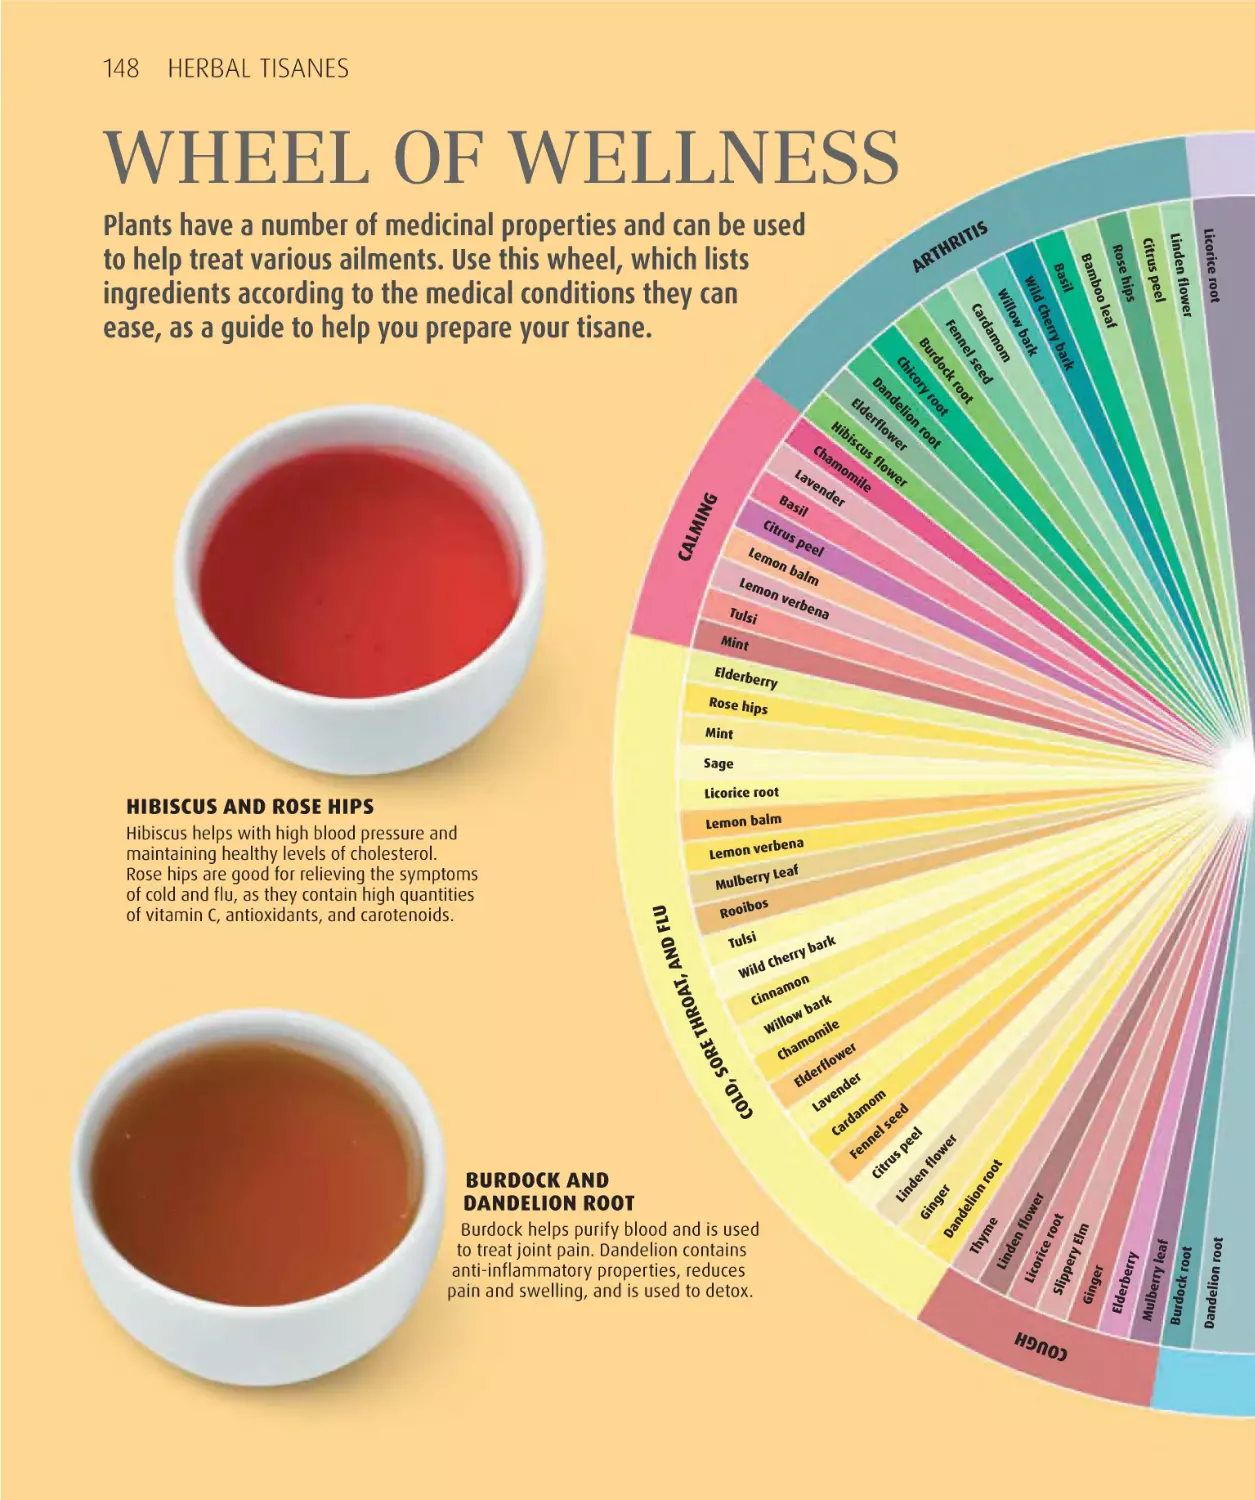 Wheel of wellness 148